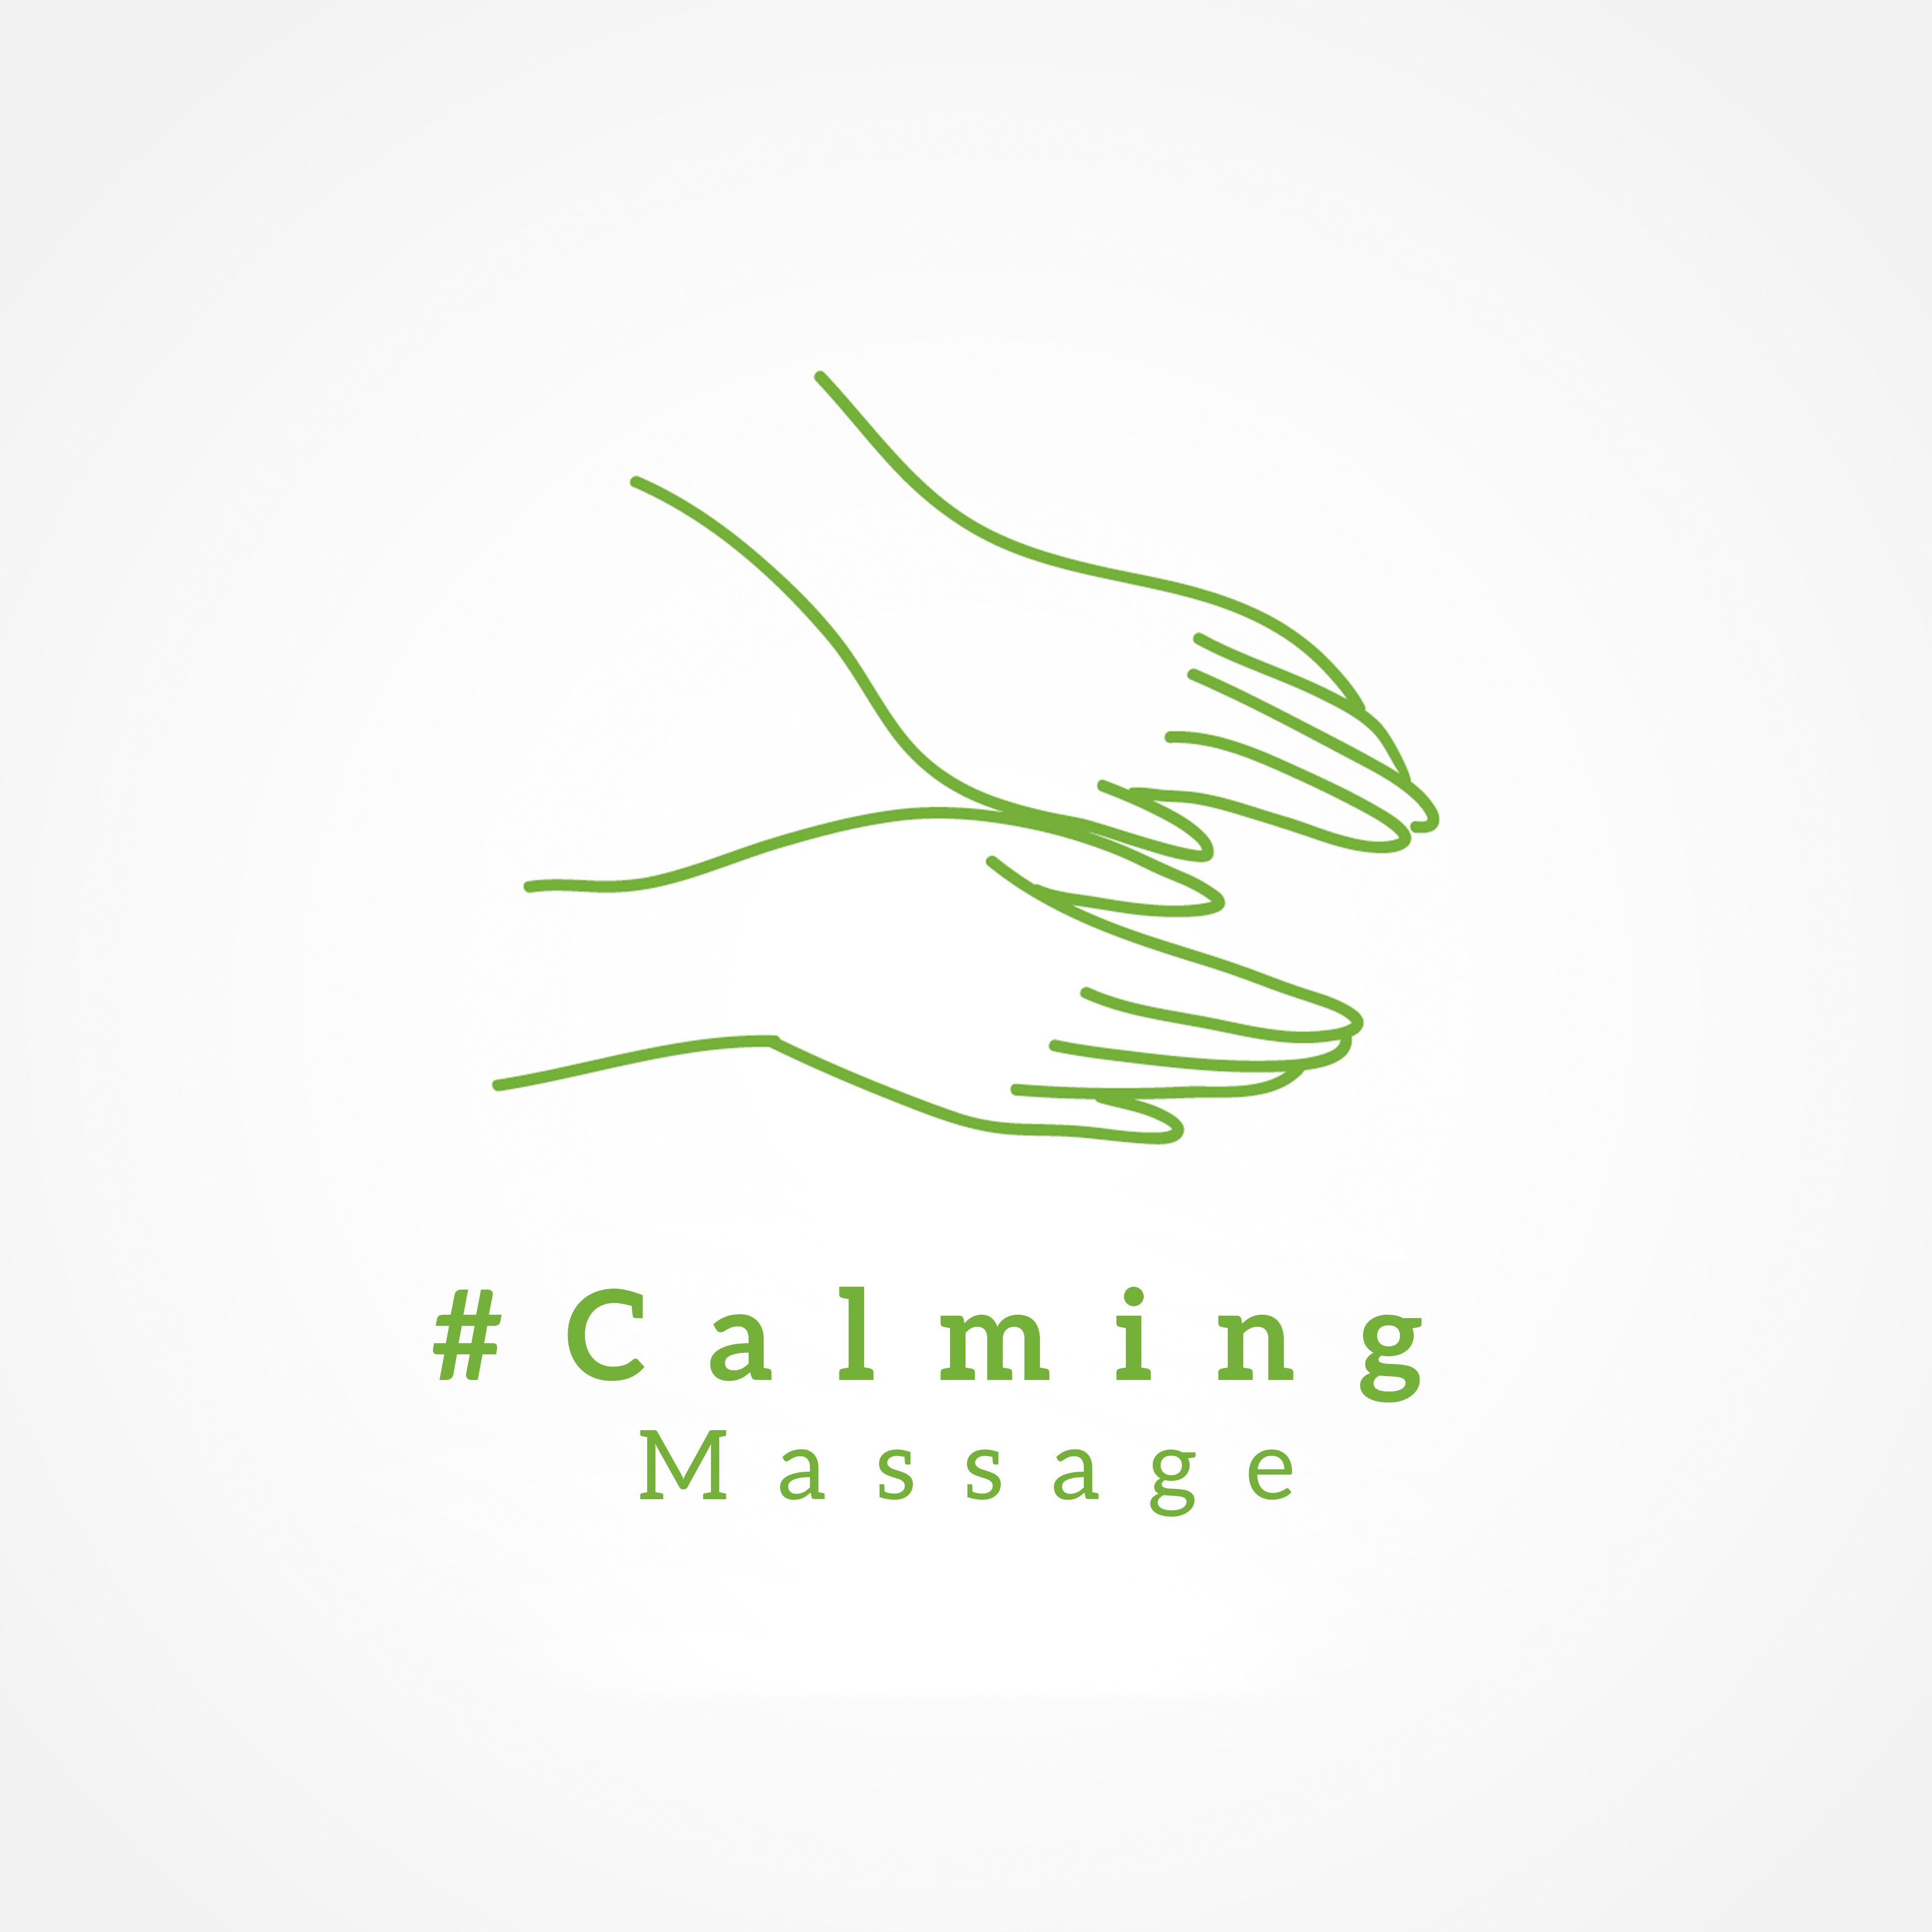 #Calming Massage